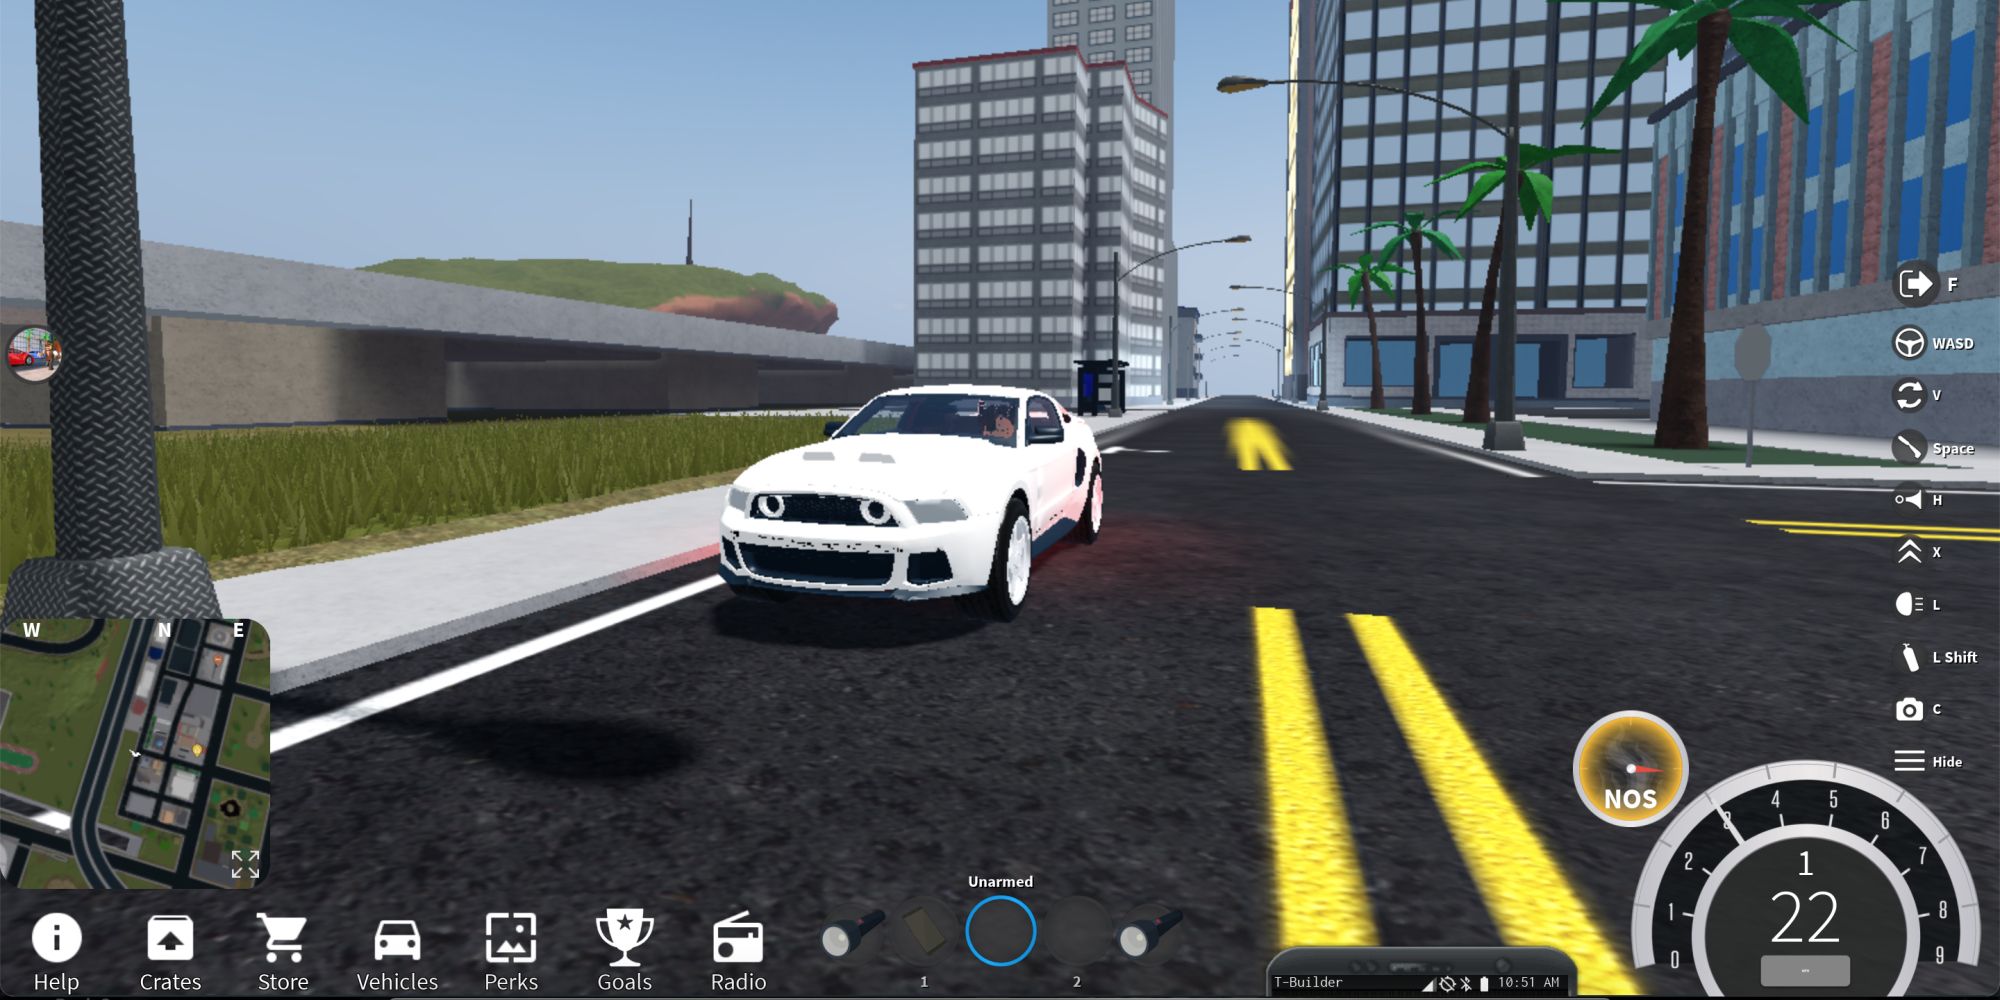 Vehicle Simulator on Roblox